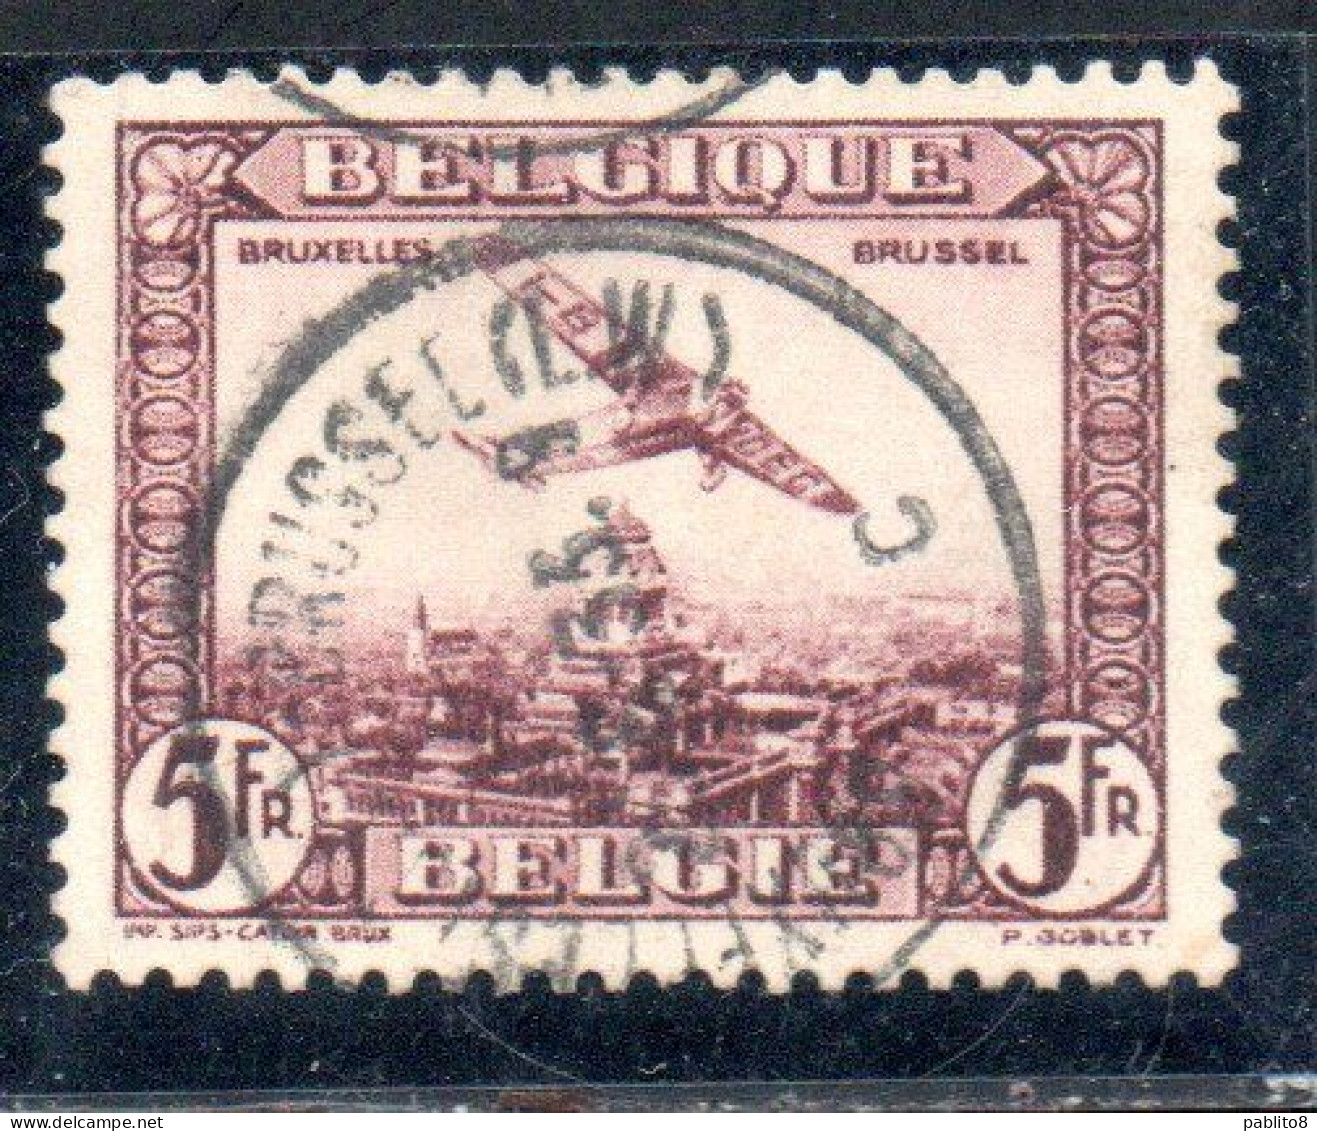 BELGIQUE BELGIE BELGIO BELGIUM 1930 AIR POST MAIL STAMP AIRMAIL FOKKER FVII/3m OVER BRUSSELS 5fr USED OBLITERE' USATO - Used